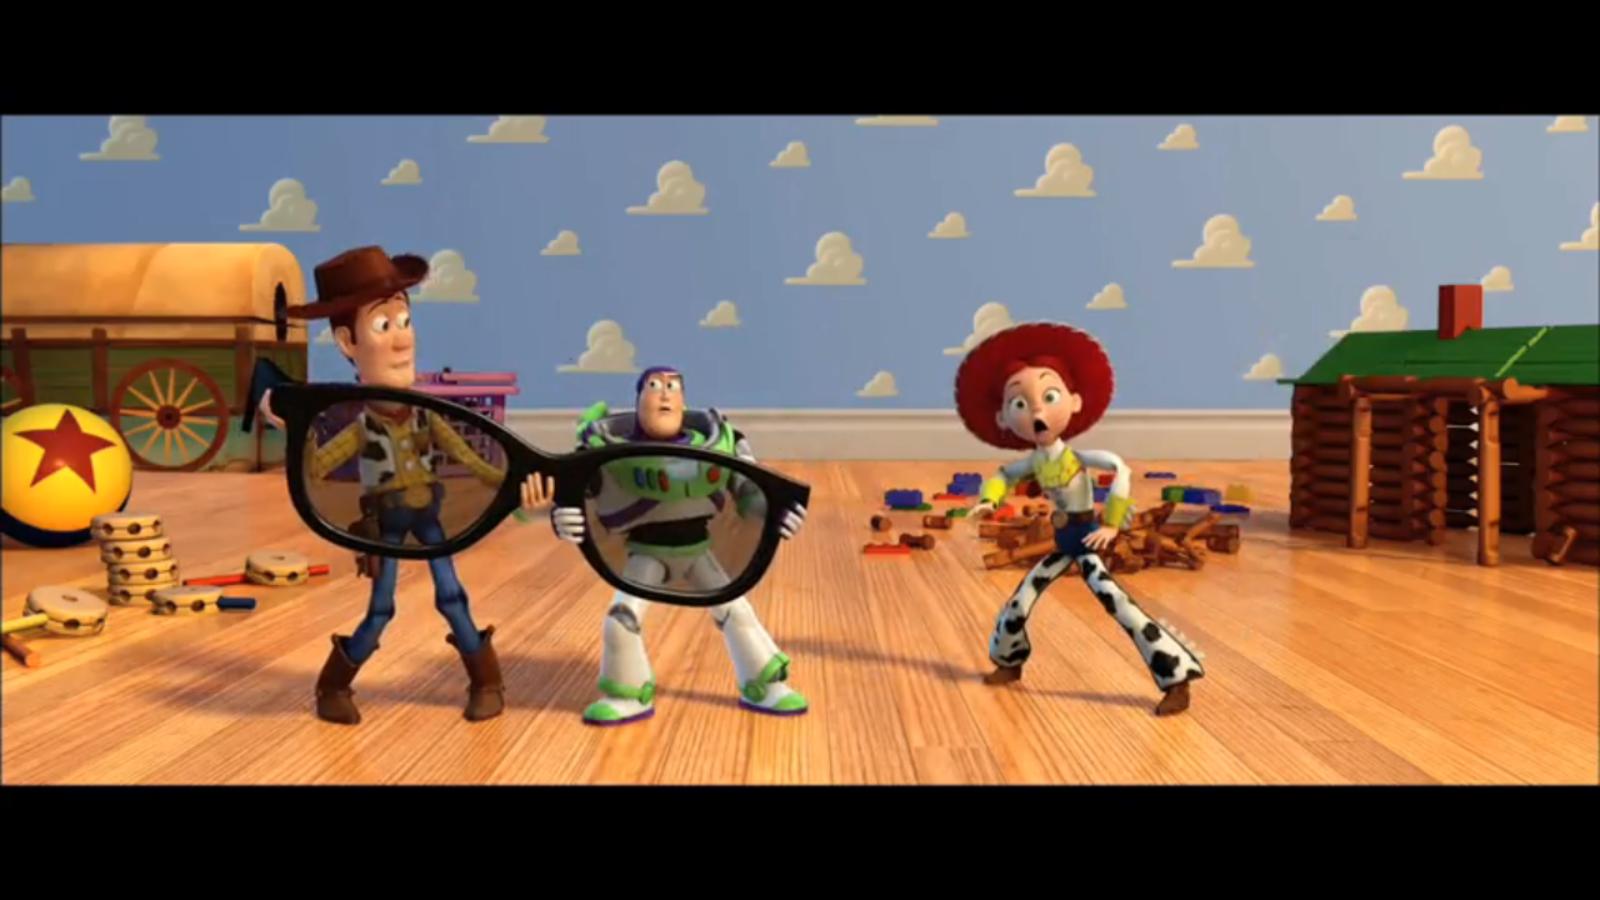 Download Toy Story 3 Wallpaper Widescreen #yt489 » masbradwall.com